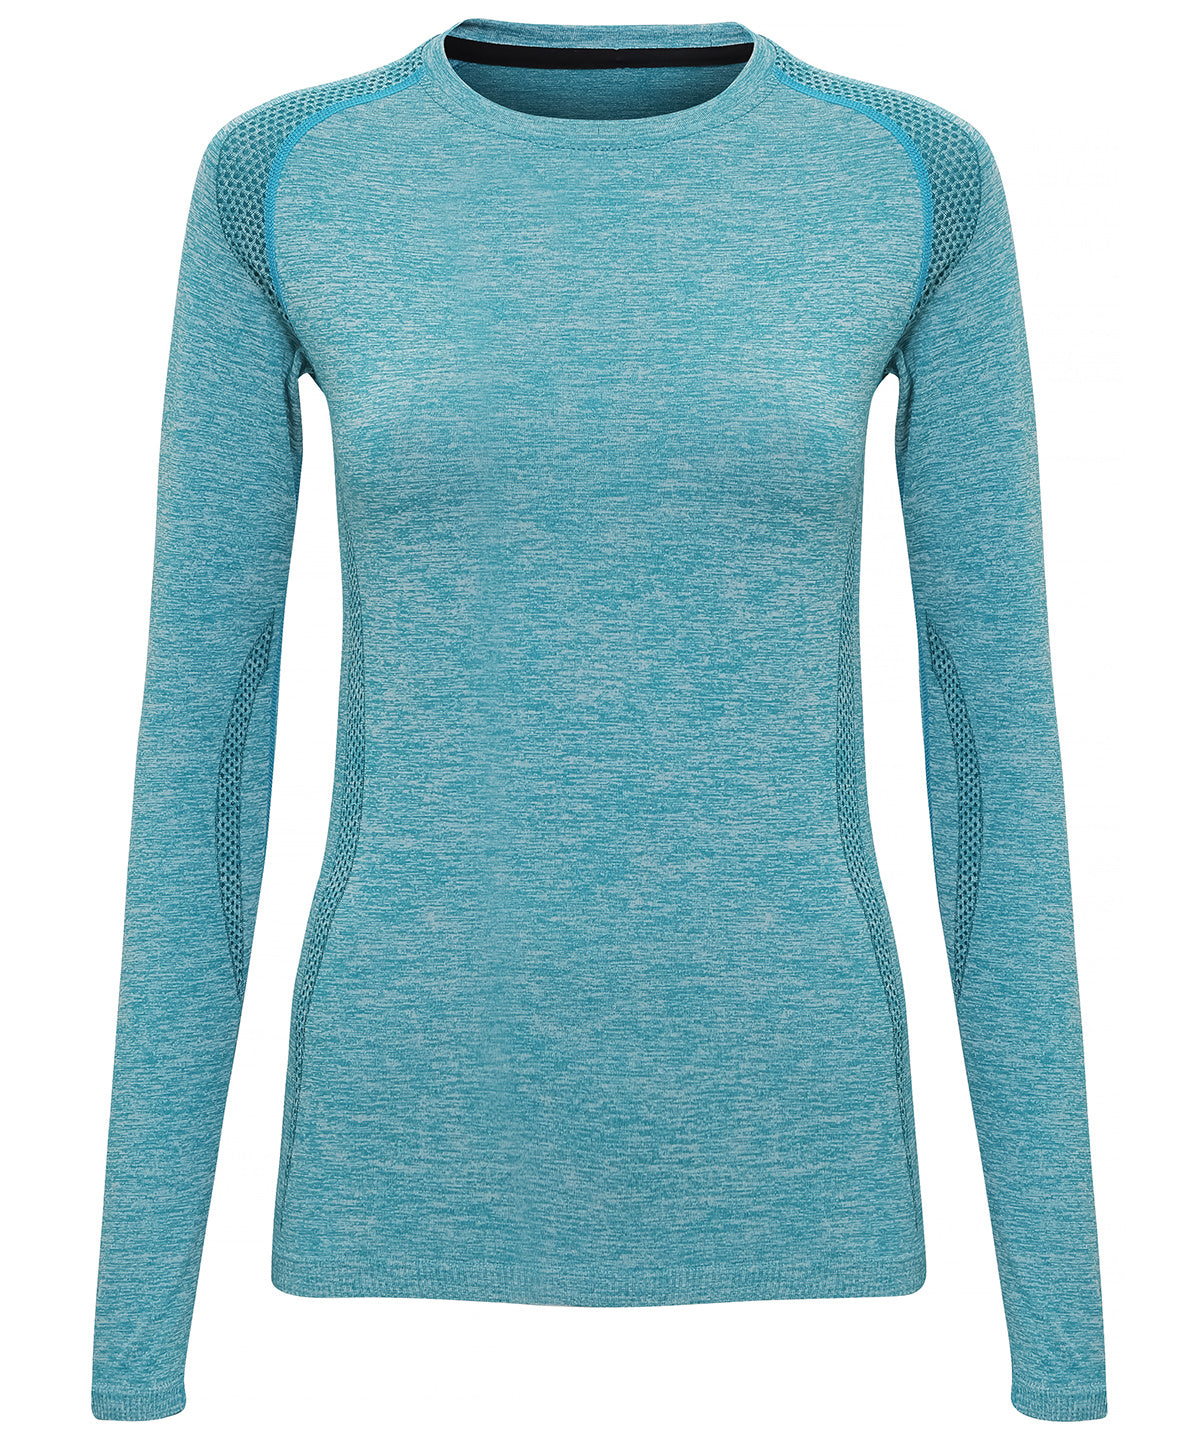 Women's TriDri® seamless '3D fit' multi-sport performance long sleeve top